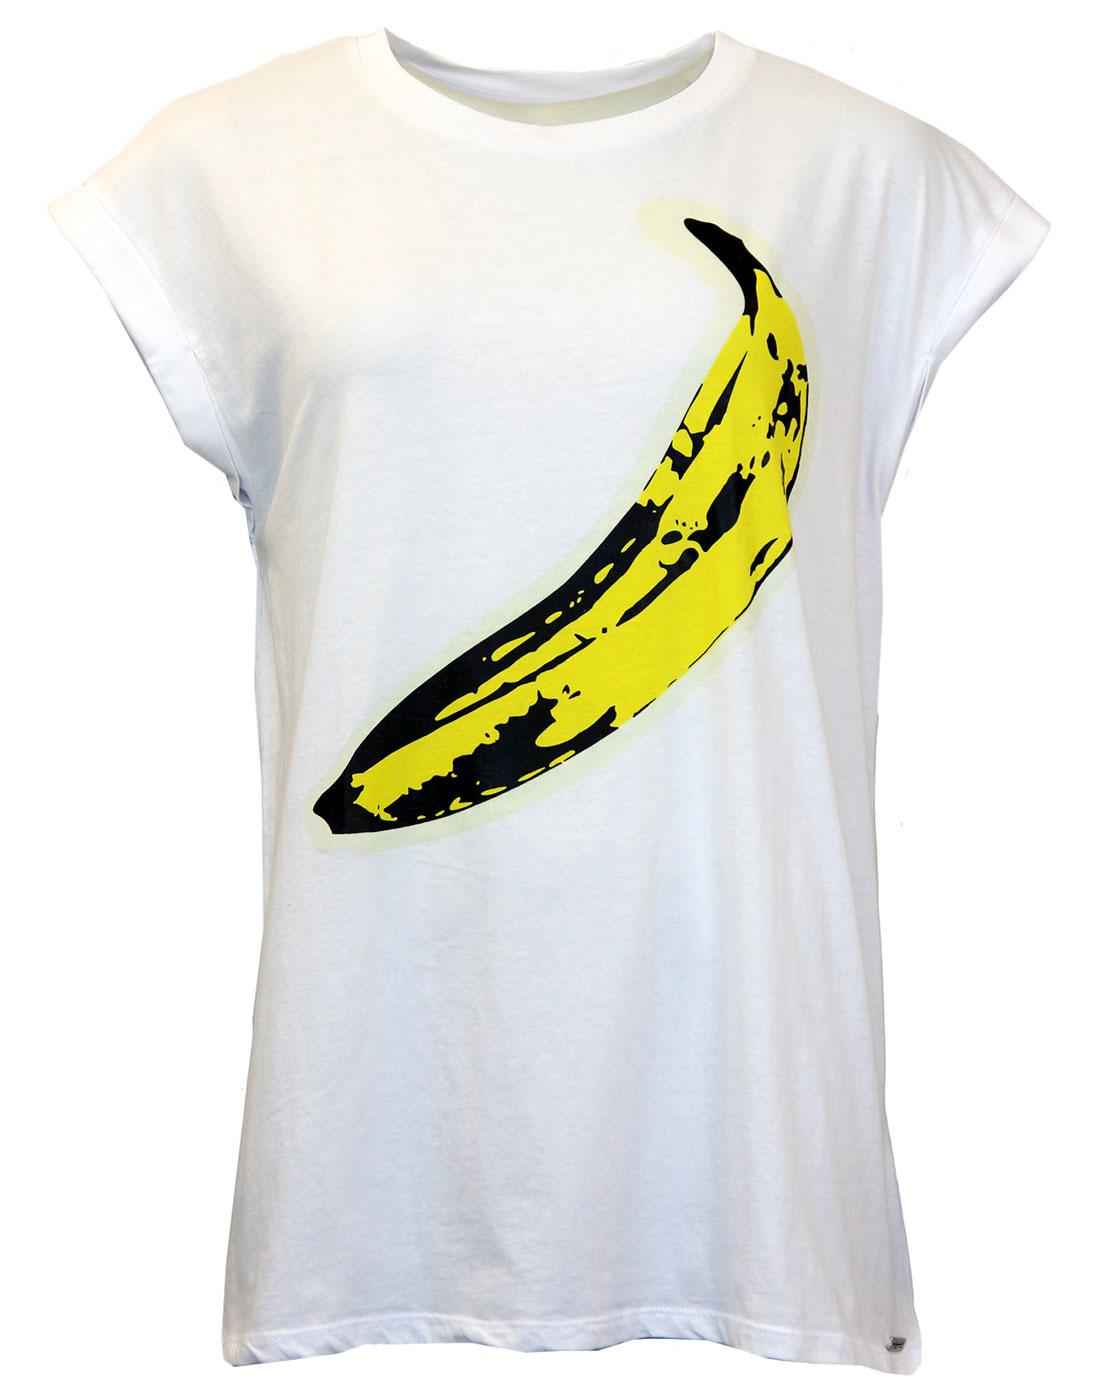 Split ANDY WARHOL Retro Pop Art Banana Print Top